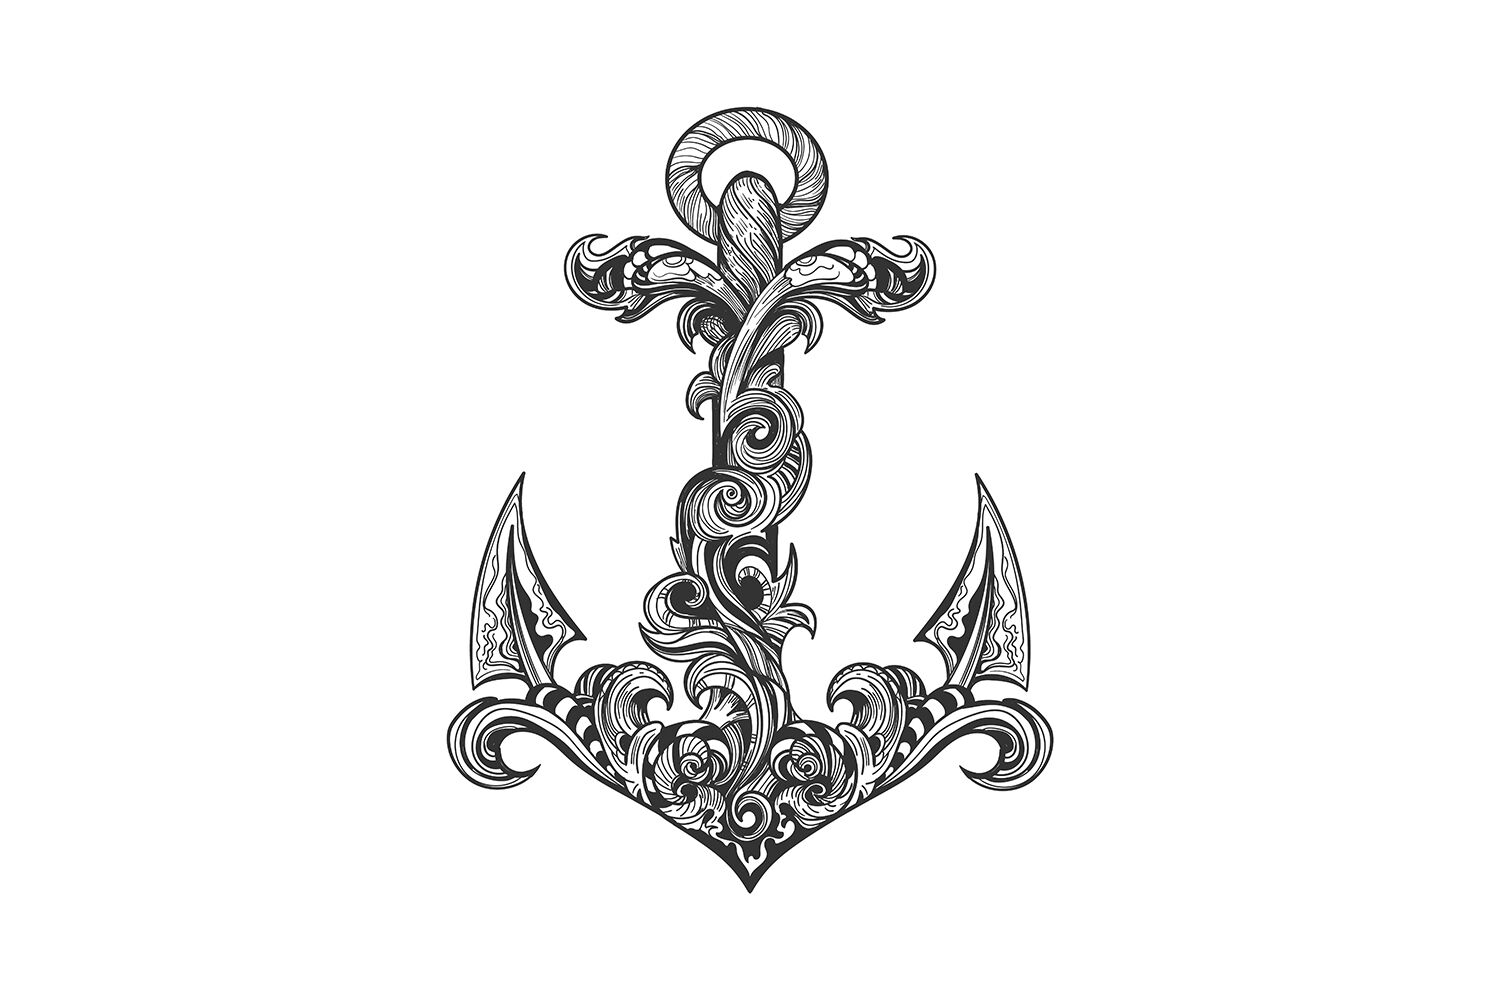 neck tattoo ideas - anchor tattoos | Anchor Tattoo Ideas and… | Flickr